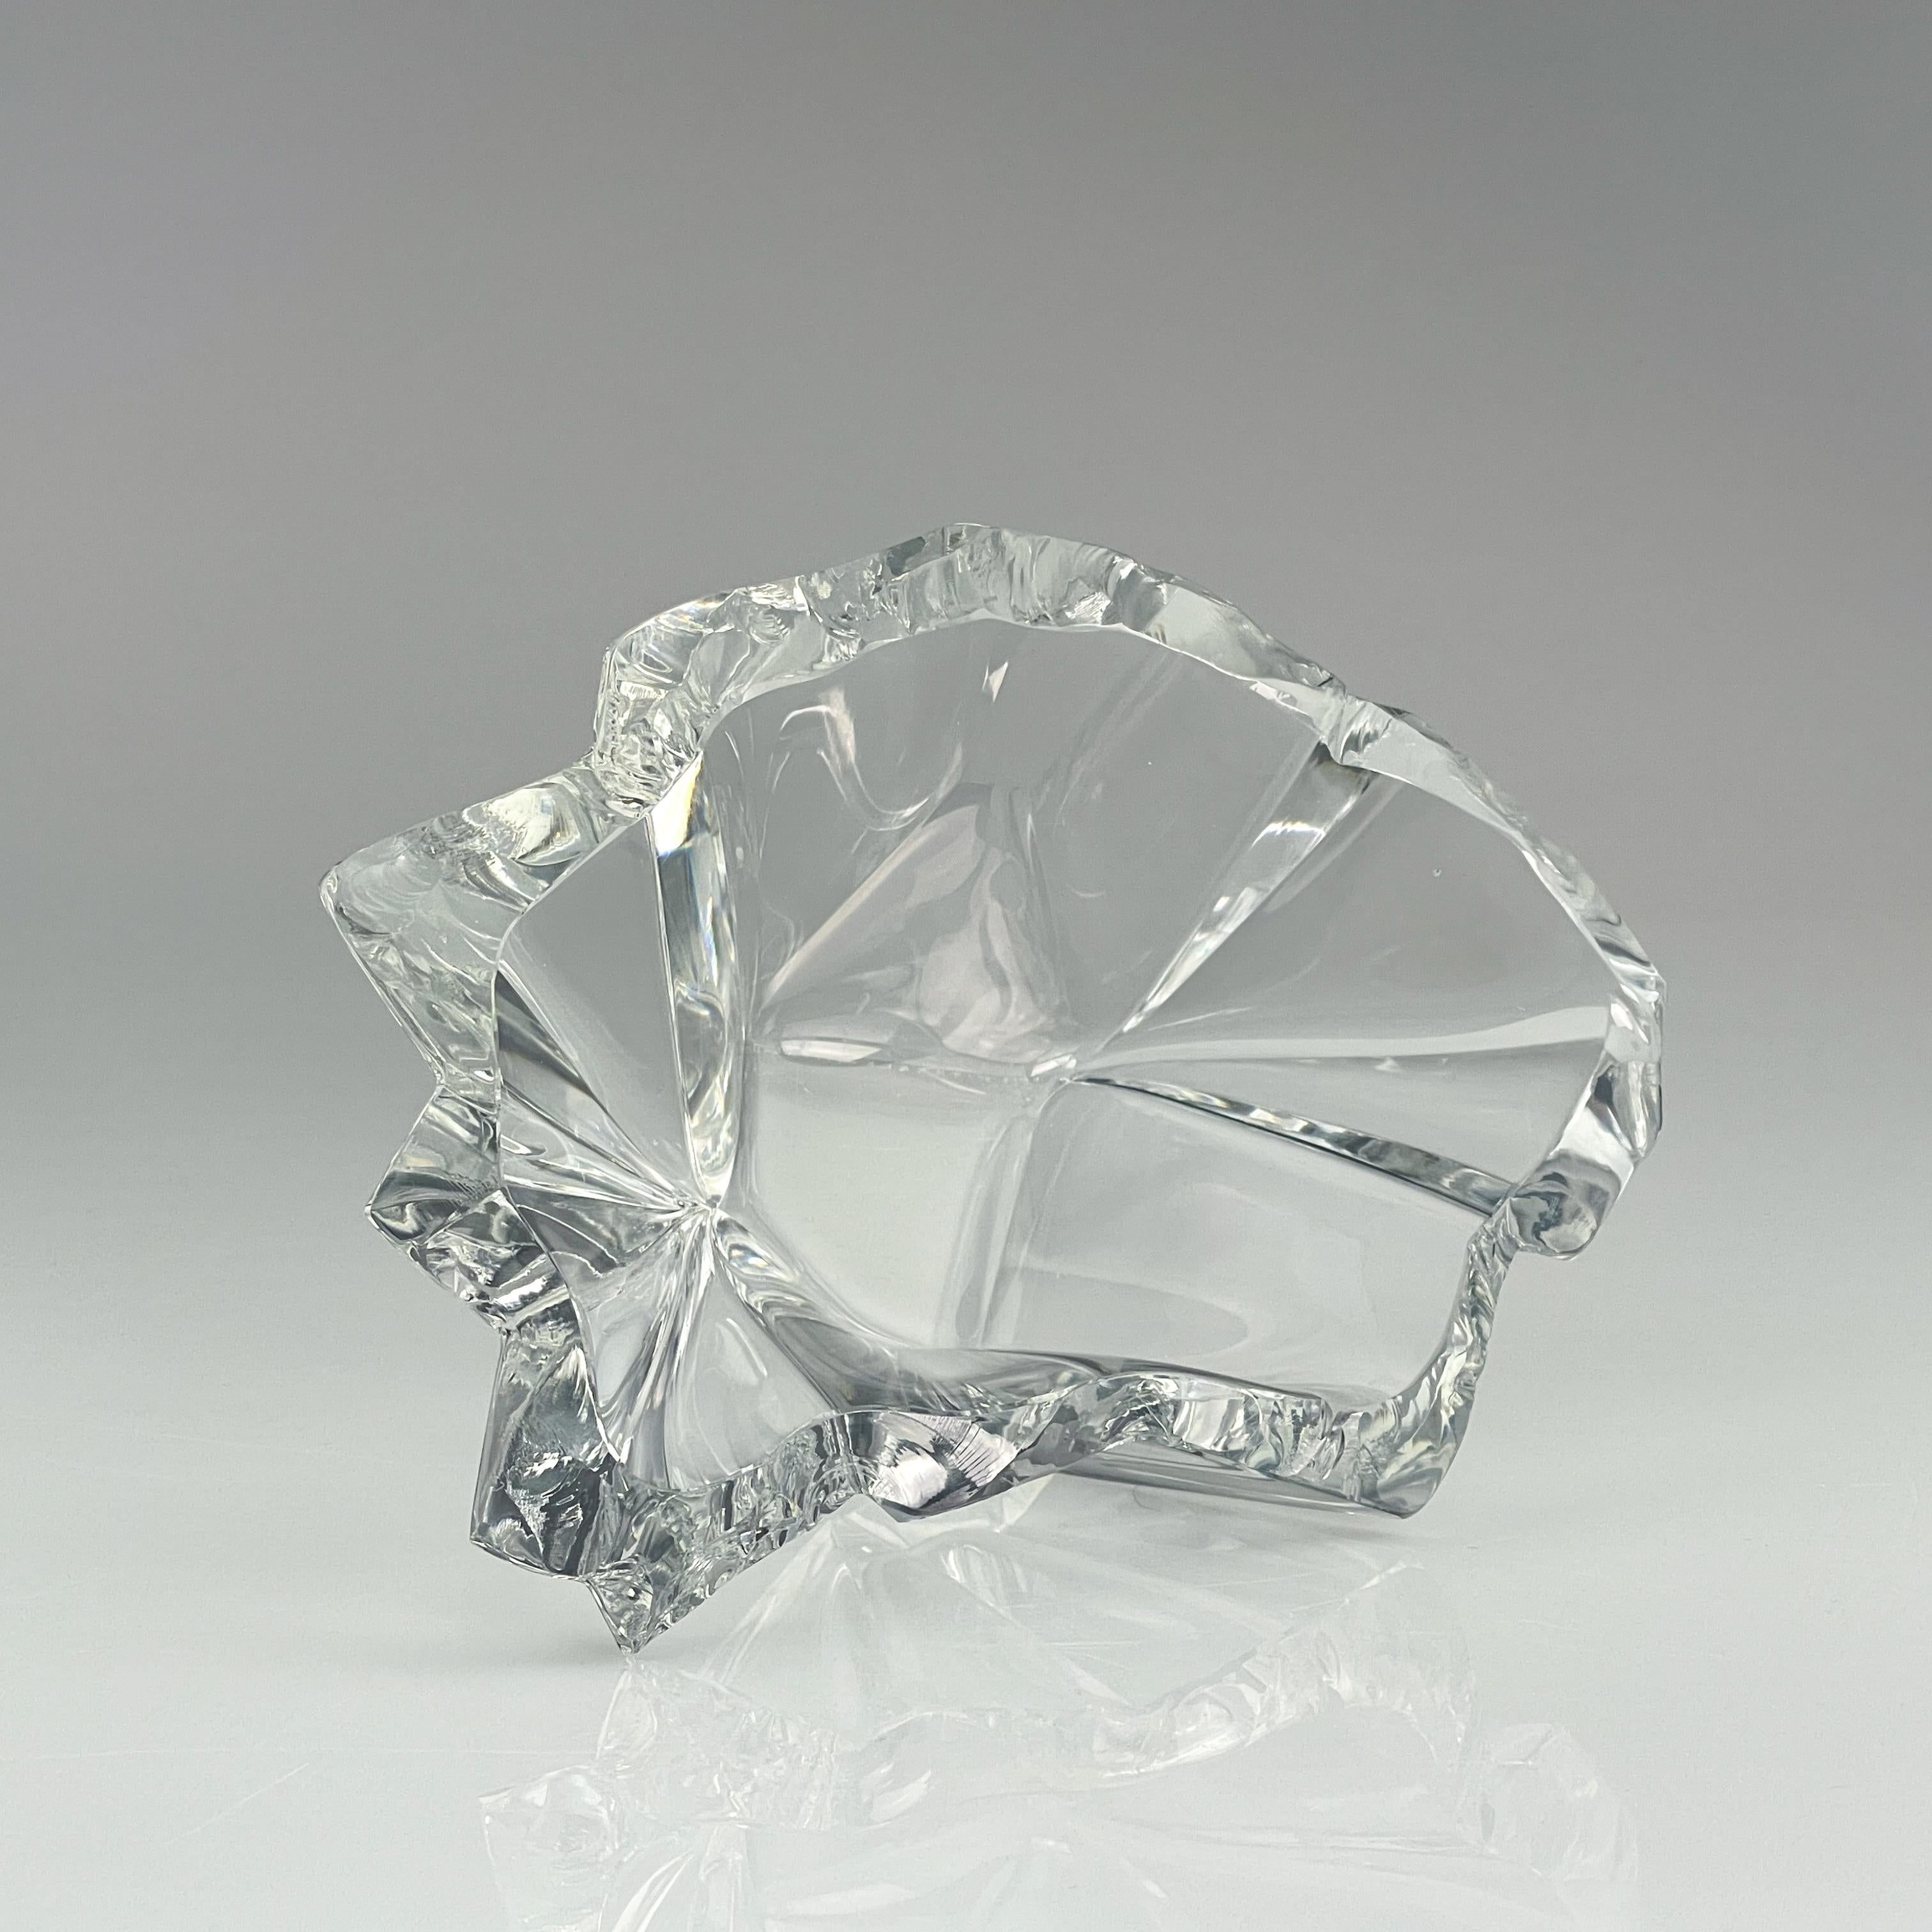 Scandinavian Modern Tapio Wirkkala Crystal Glass Art Bowl Handblown Iittala 1960 3